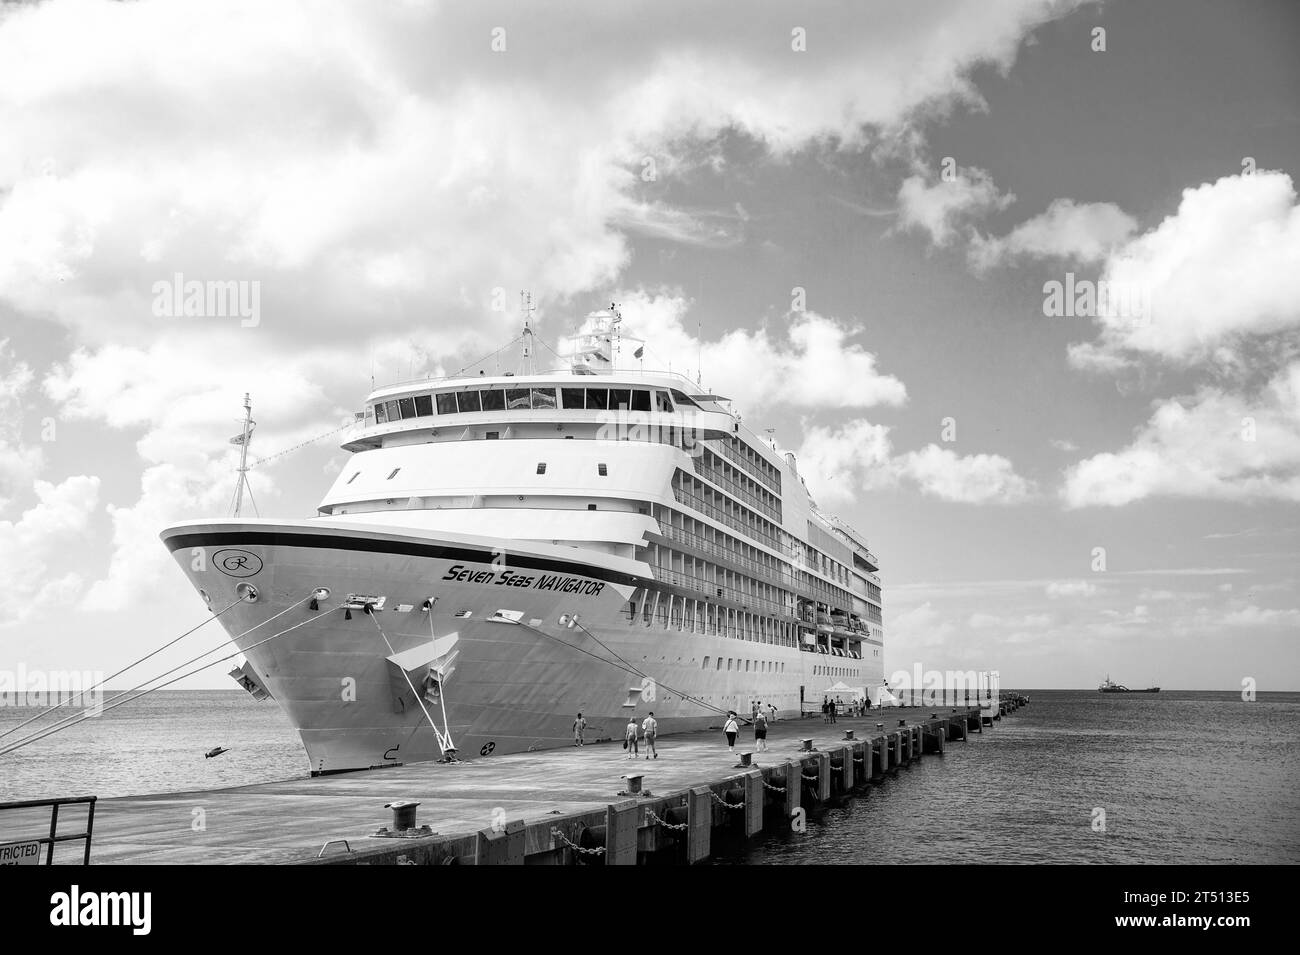 St. George, Grenada - November 27, 2015: seven seas navigator cruise ship liner Stock Photo